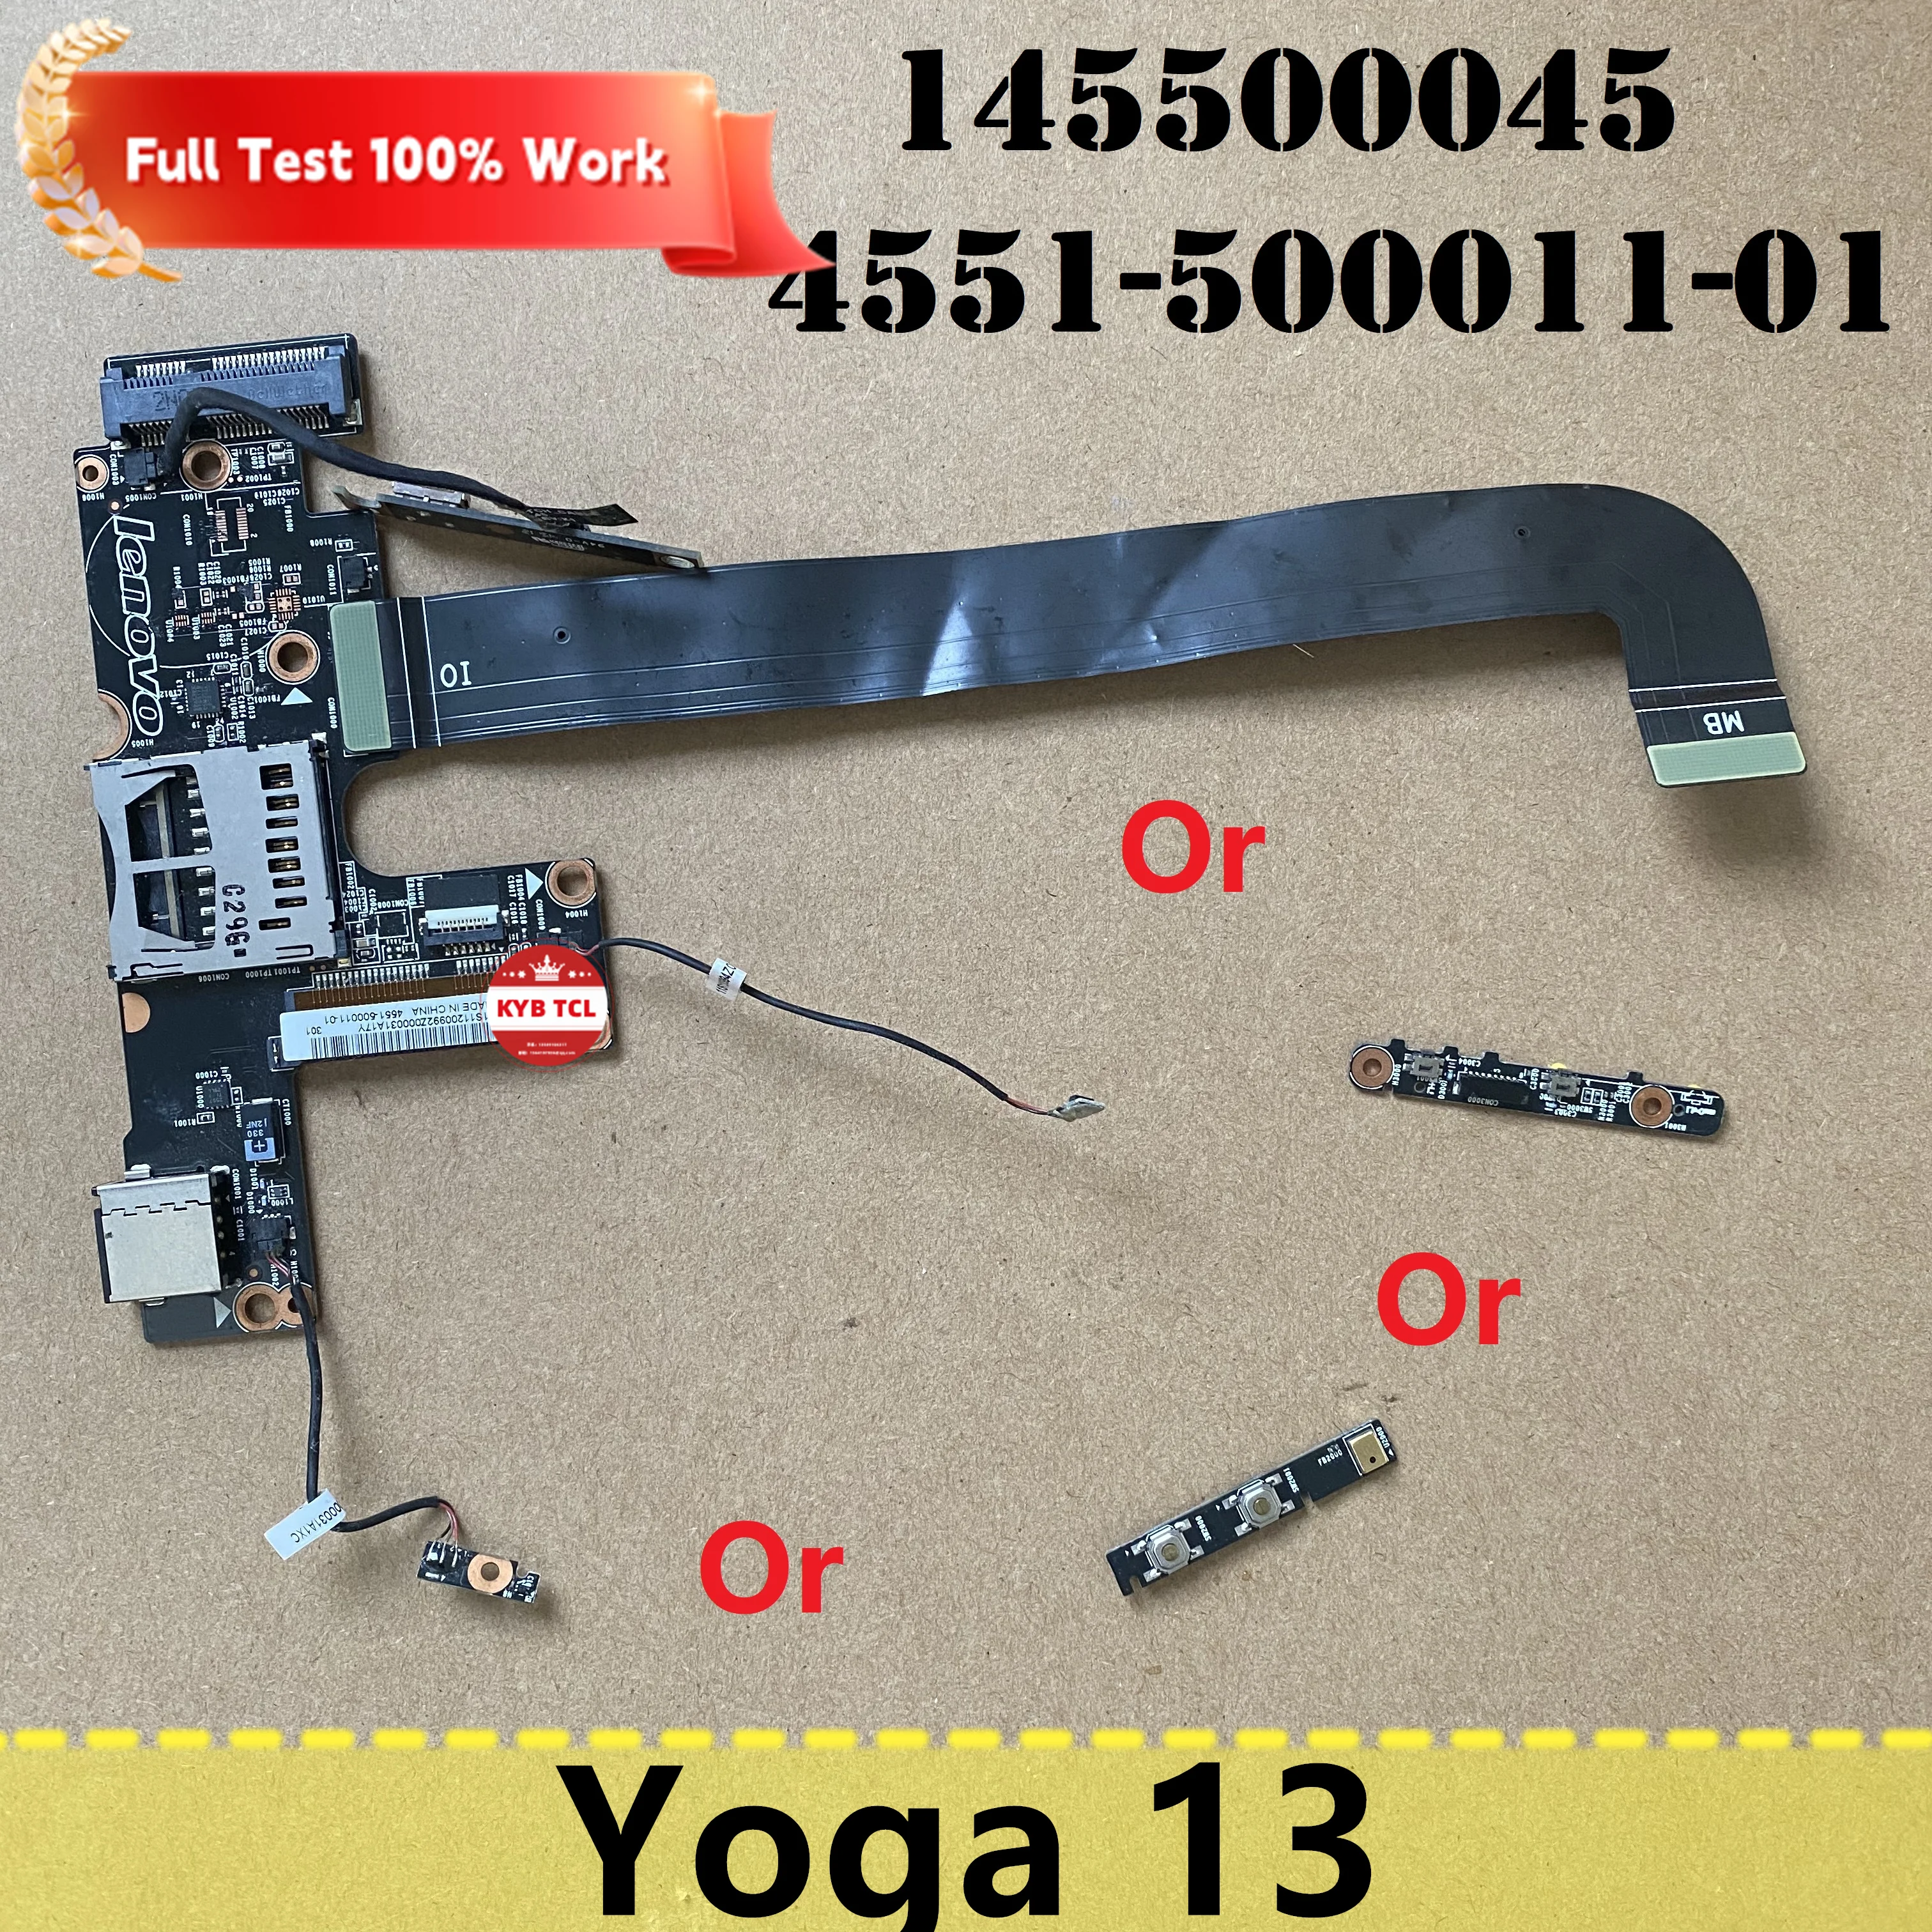 Для Lenovo Yoga 13 Плата USB-кард-ридера или плата переключателя Wi-Fi с Кабелем или Плата кнопки регулировки громкости Питания 4551-500011-01 145500045